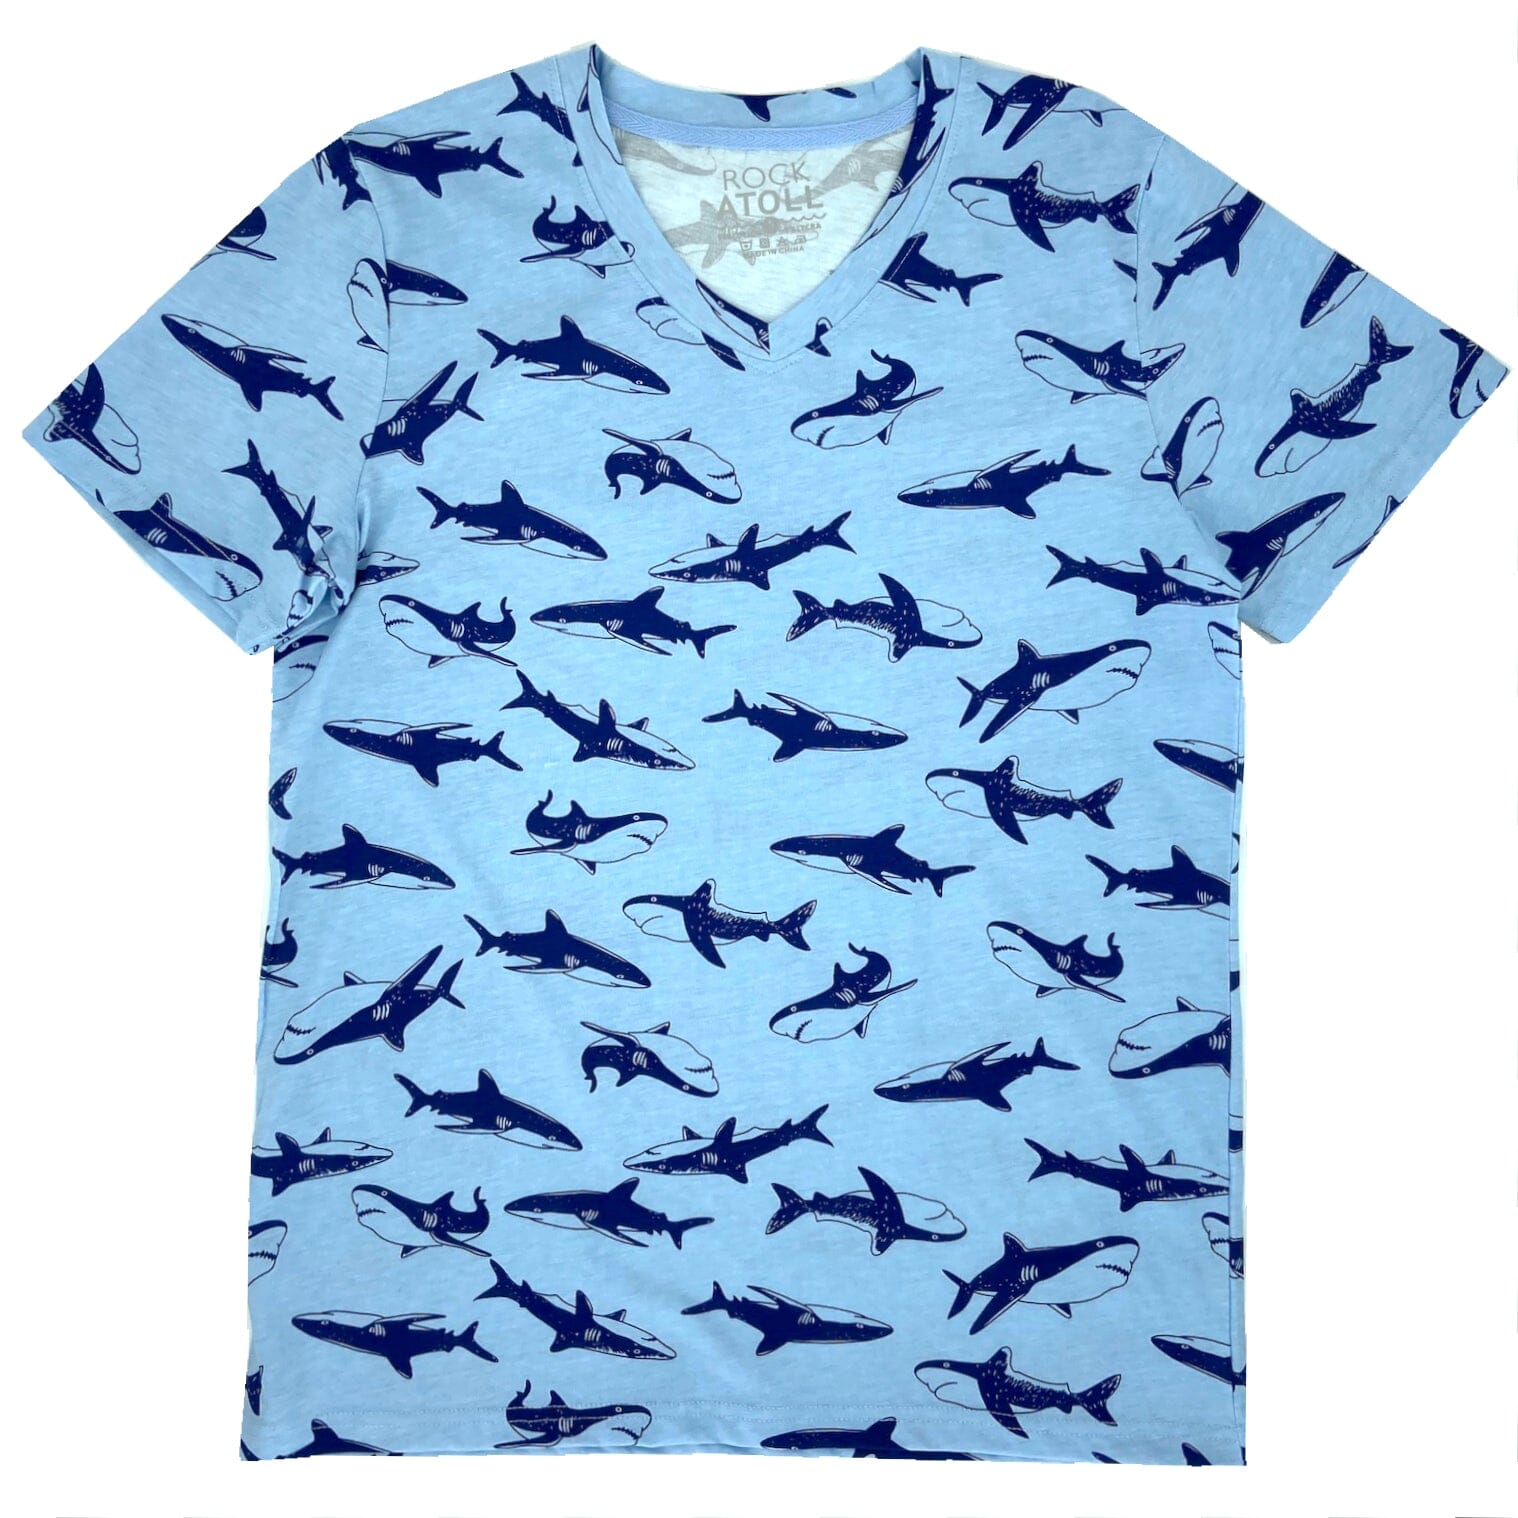 Men's Super Soft Blue Great White Shark Novelty Print Cotton T-Shirt V-Neck